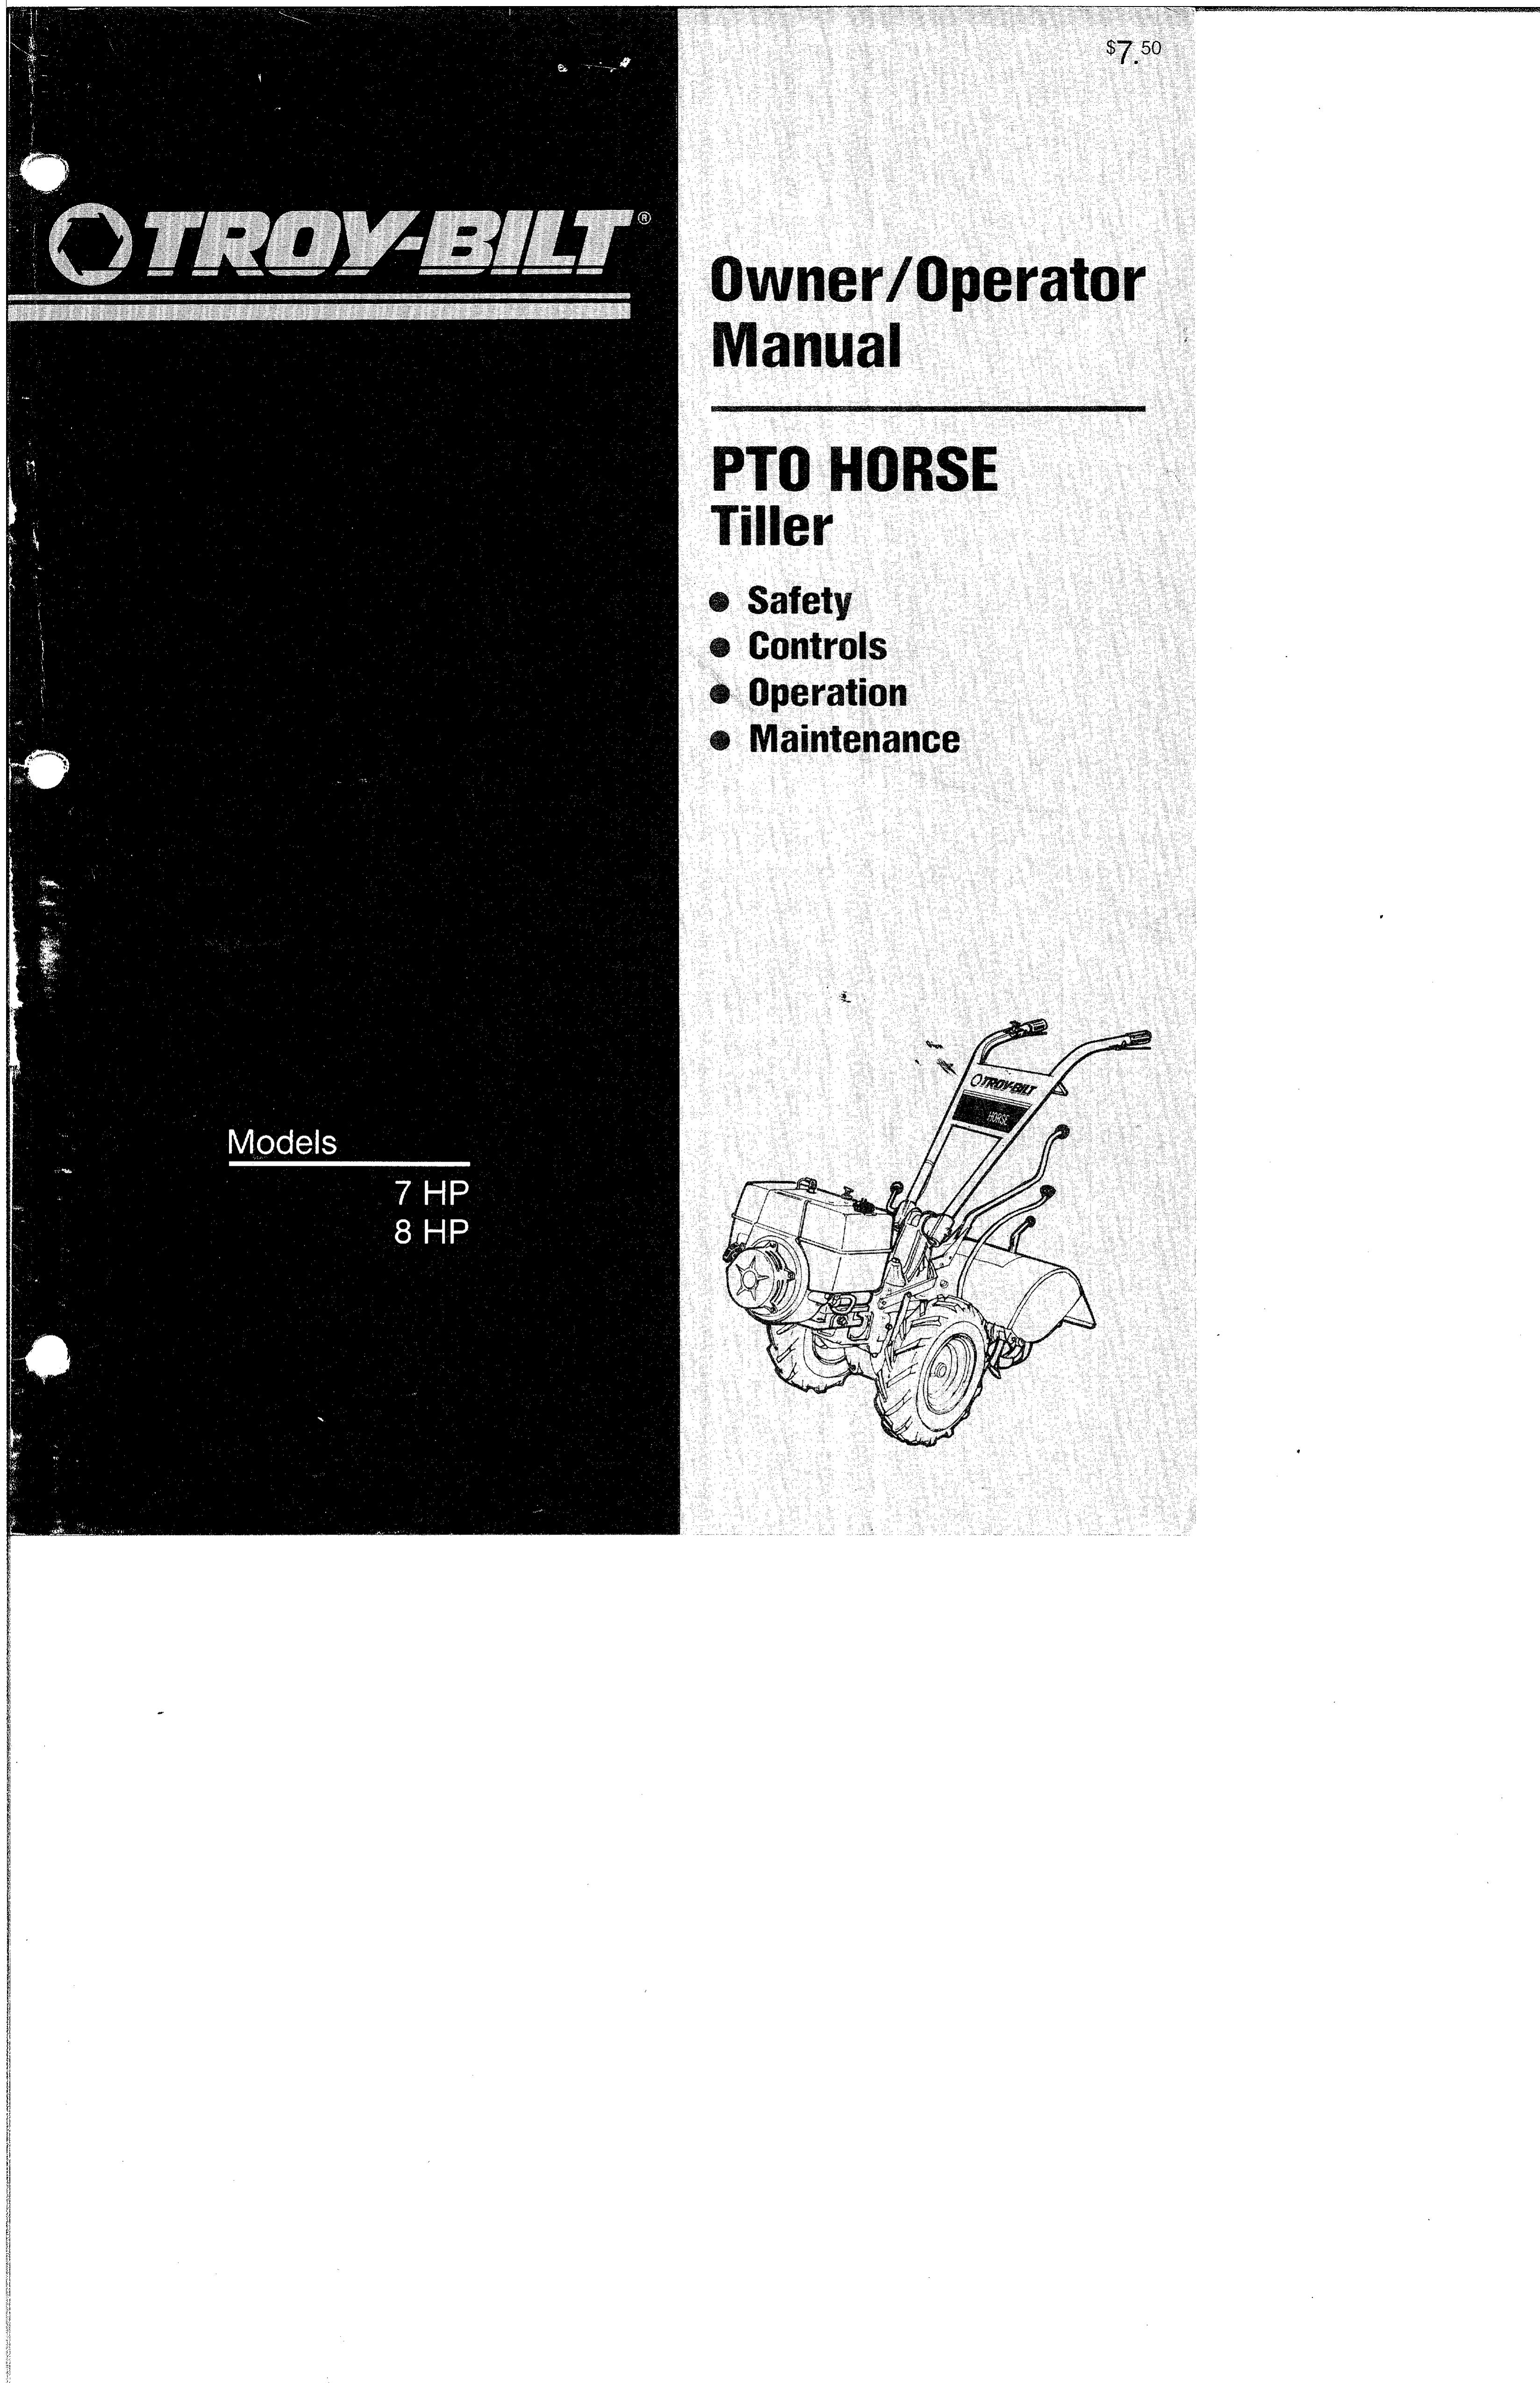 Troy-Bilt 7 HP Chipper User Manual